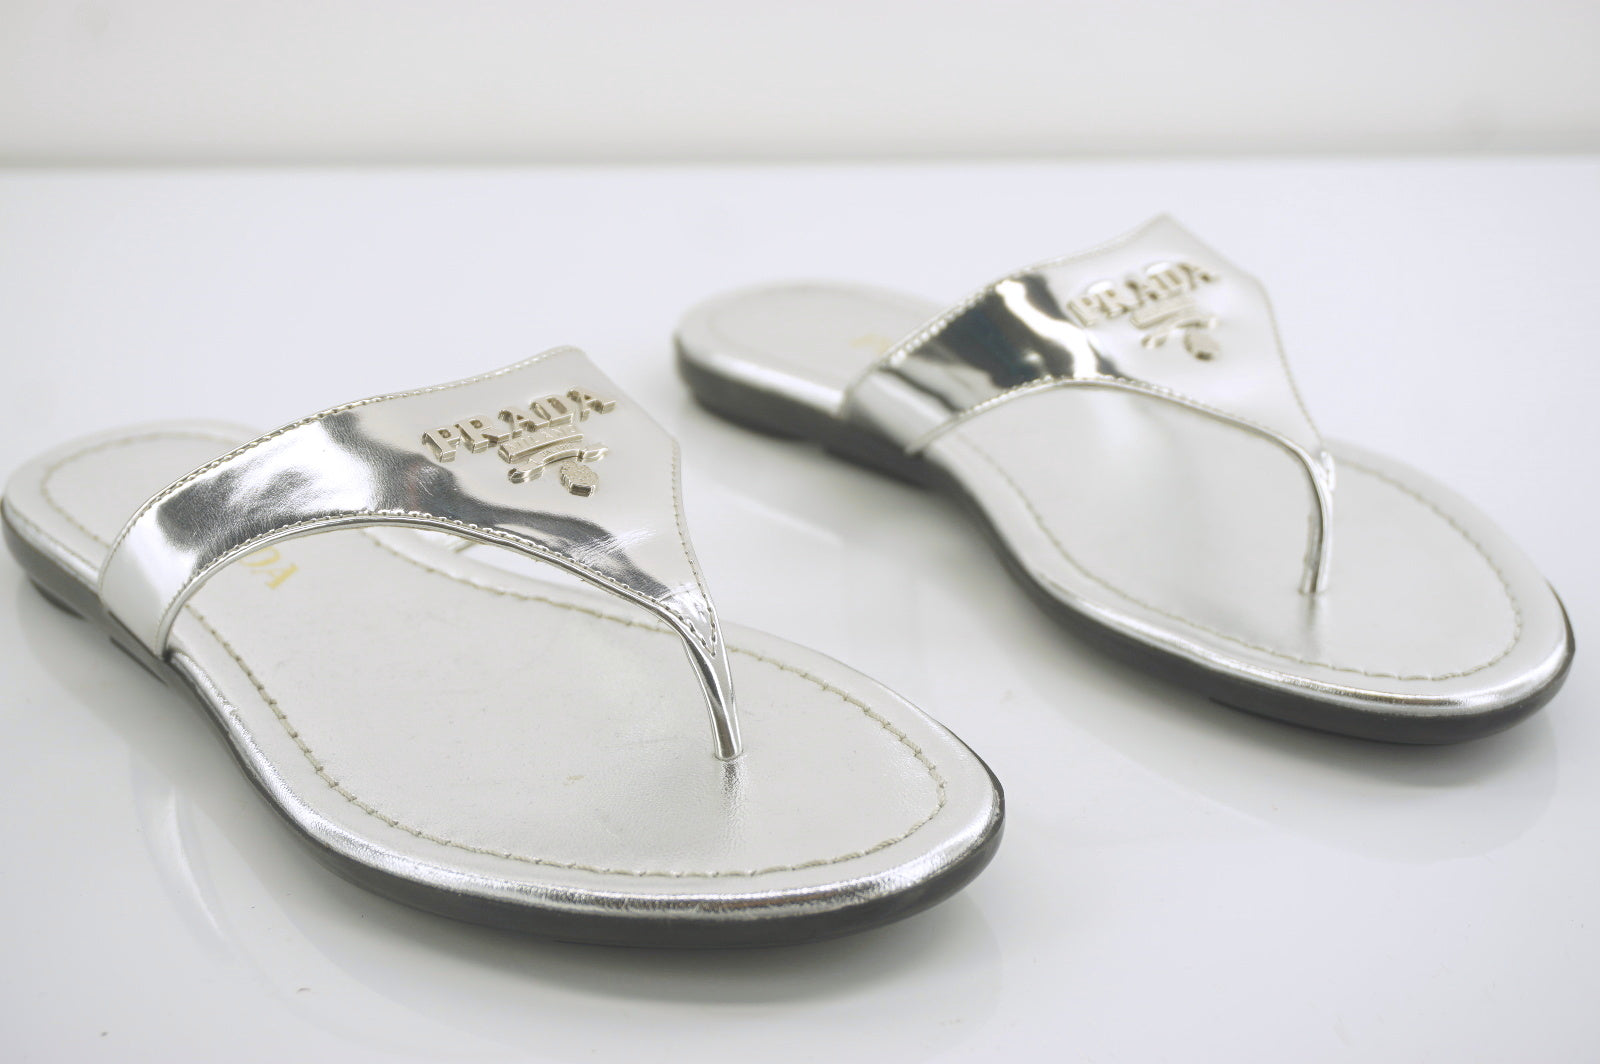 Prada Sport Metallic Silver patent thong sandal SZ 35 Gold logo $390 New